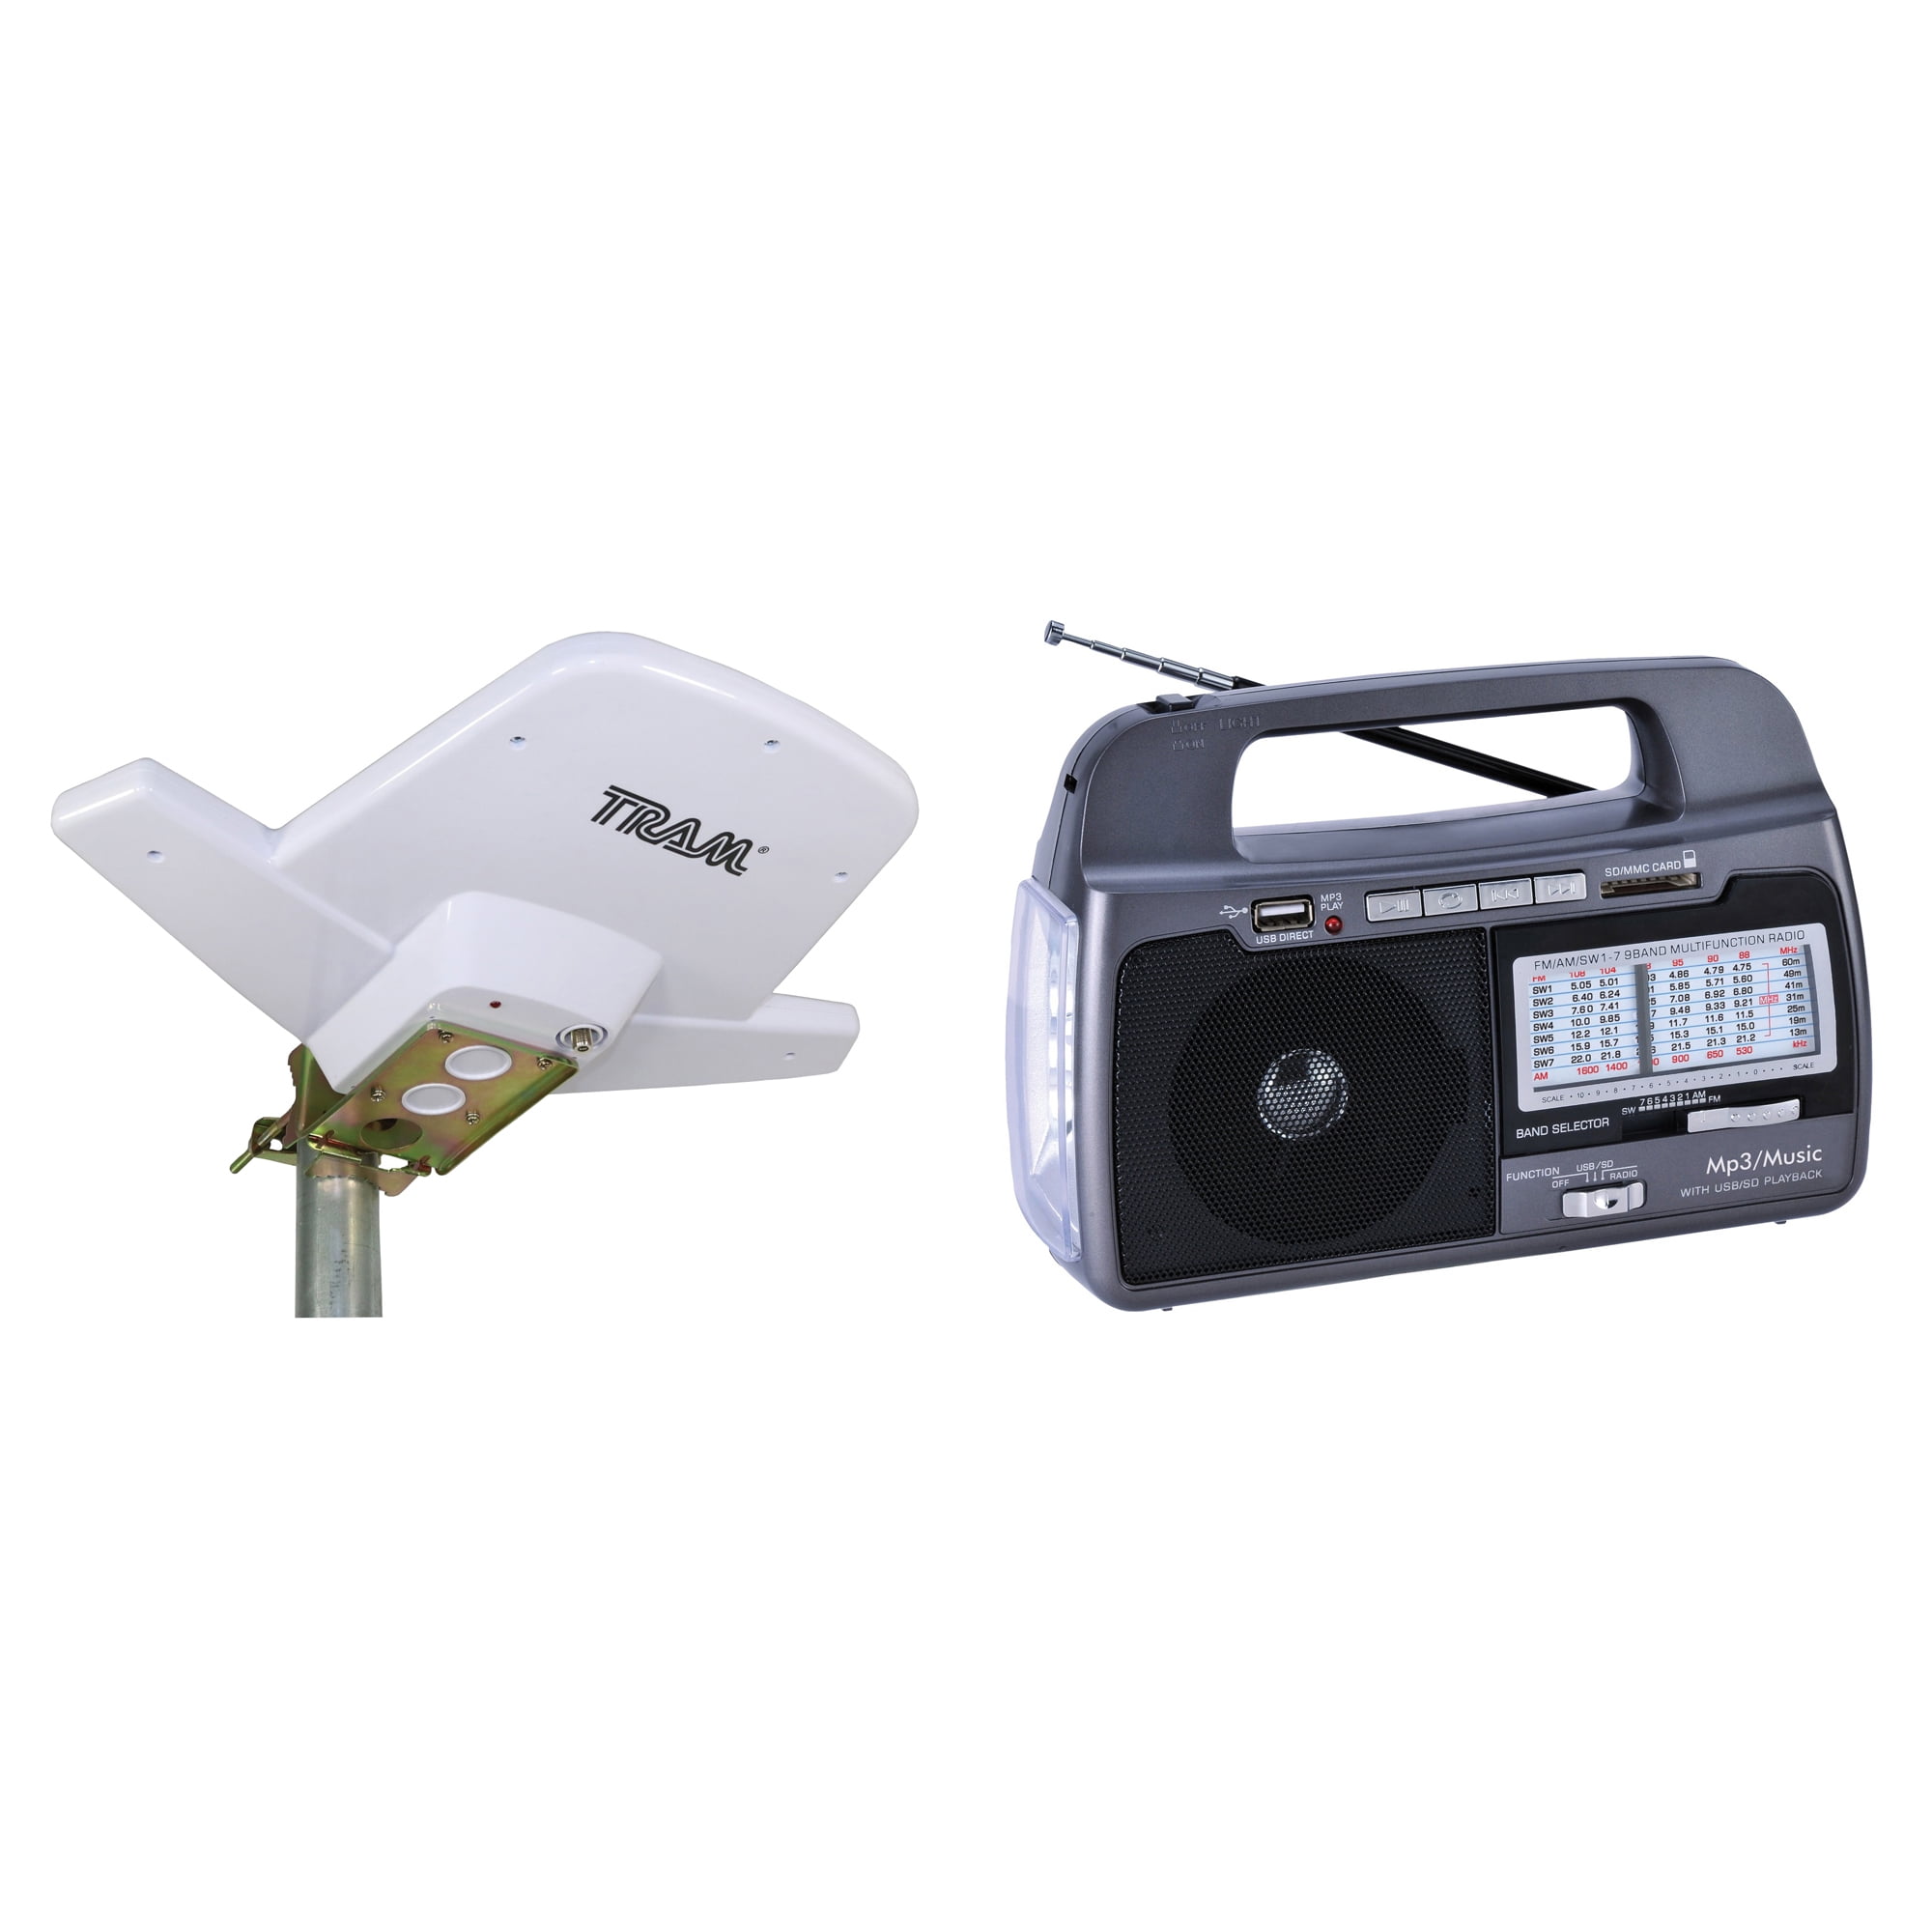 GPX Black AM FM Portable AC DC Table or Shop Radio Smartphone Input US Seller 